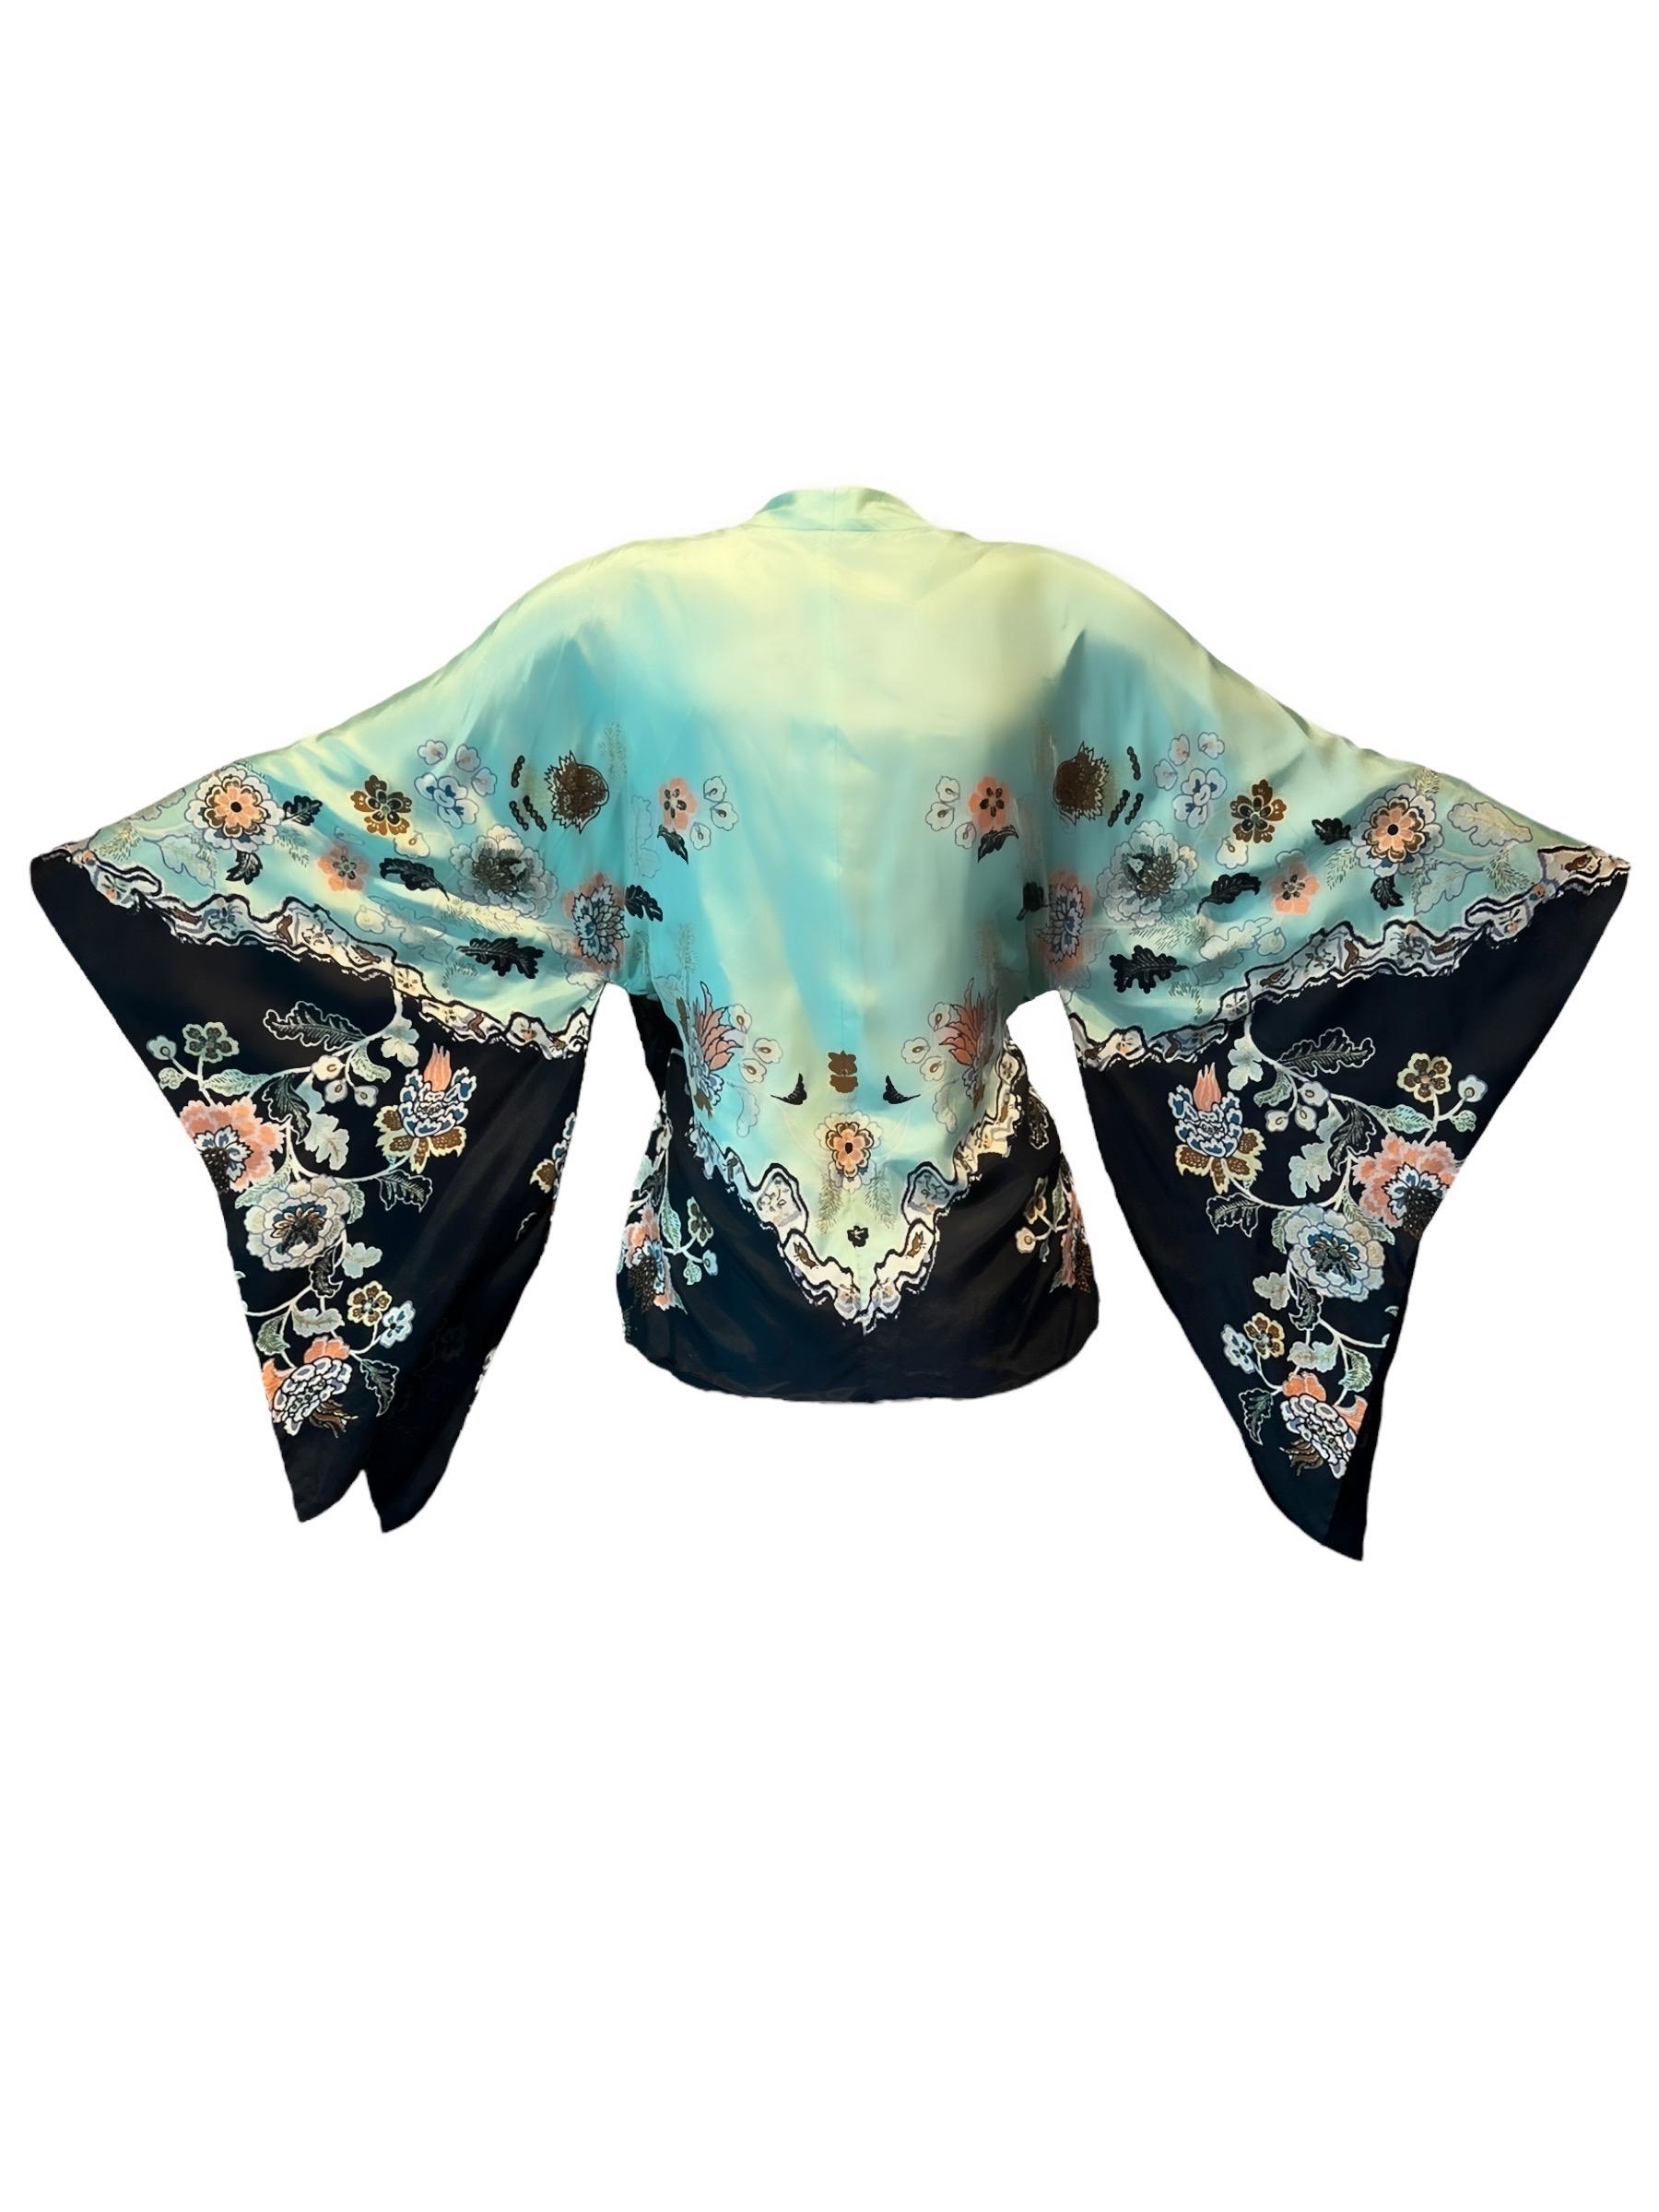 Roberto Cavalli S/S 2003 Runway Chinoiserie Print Silk Kimono Top In Good Condition For Sale In Naples, FL